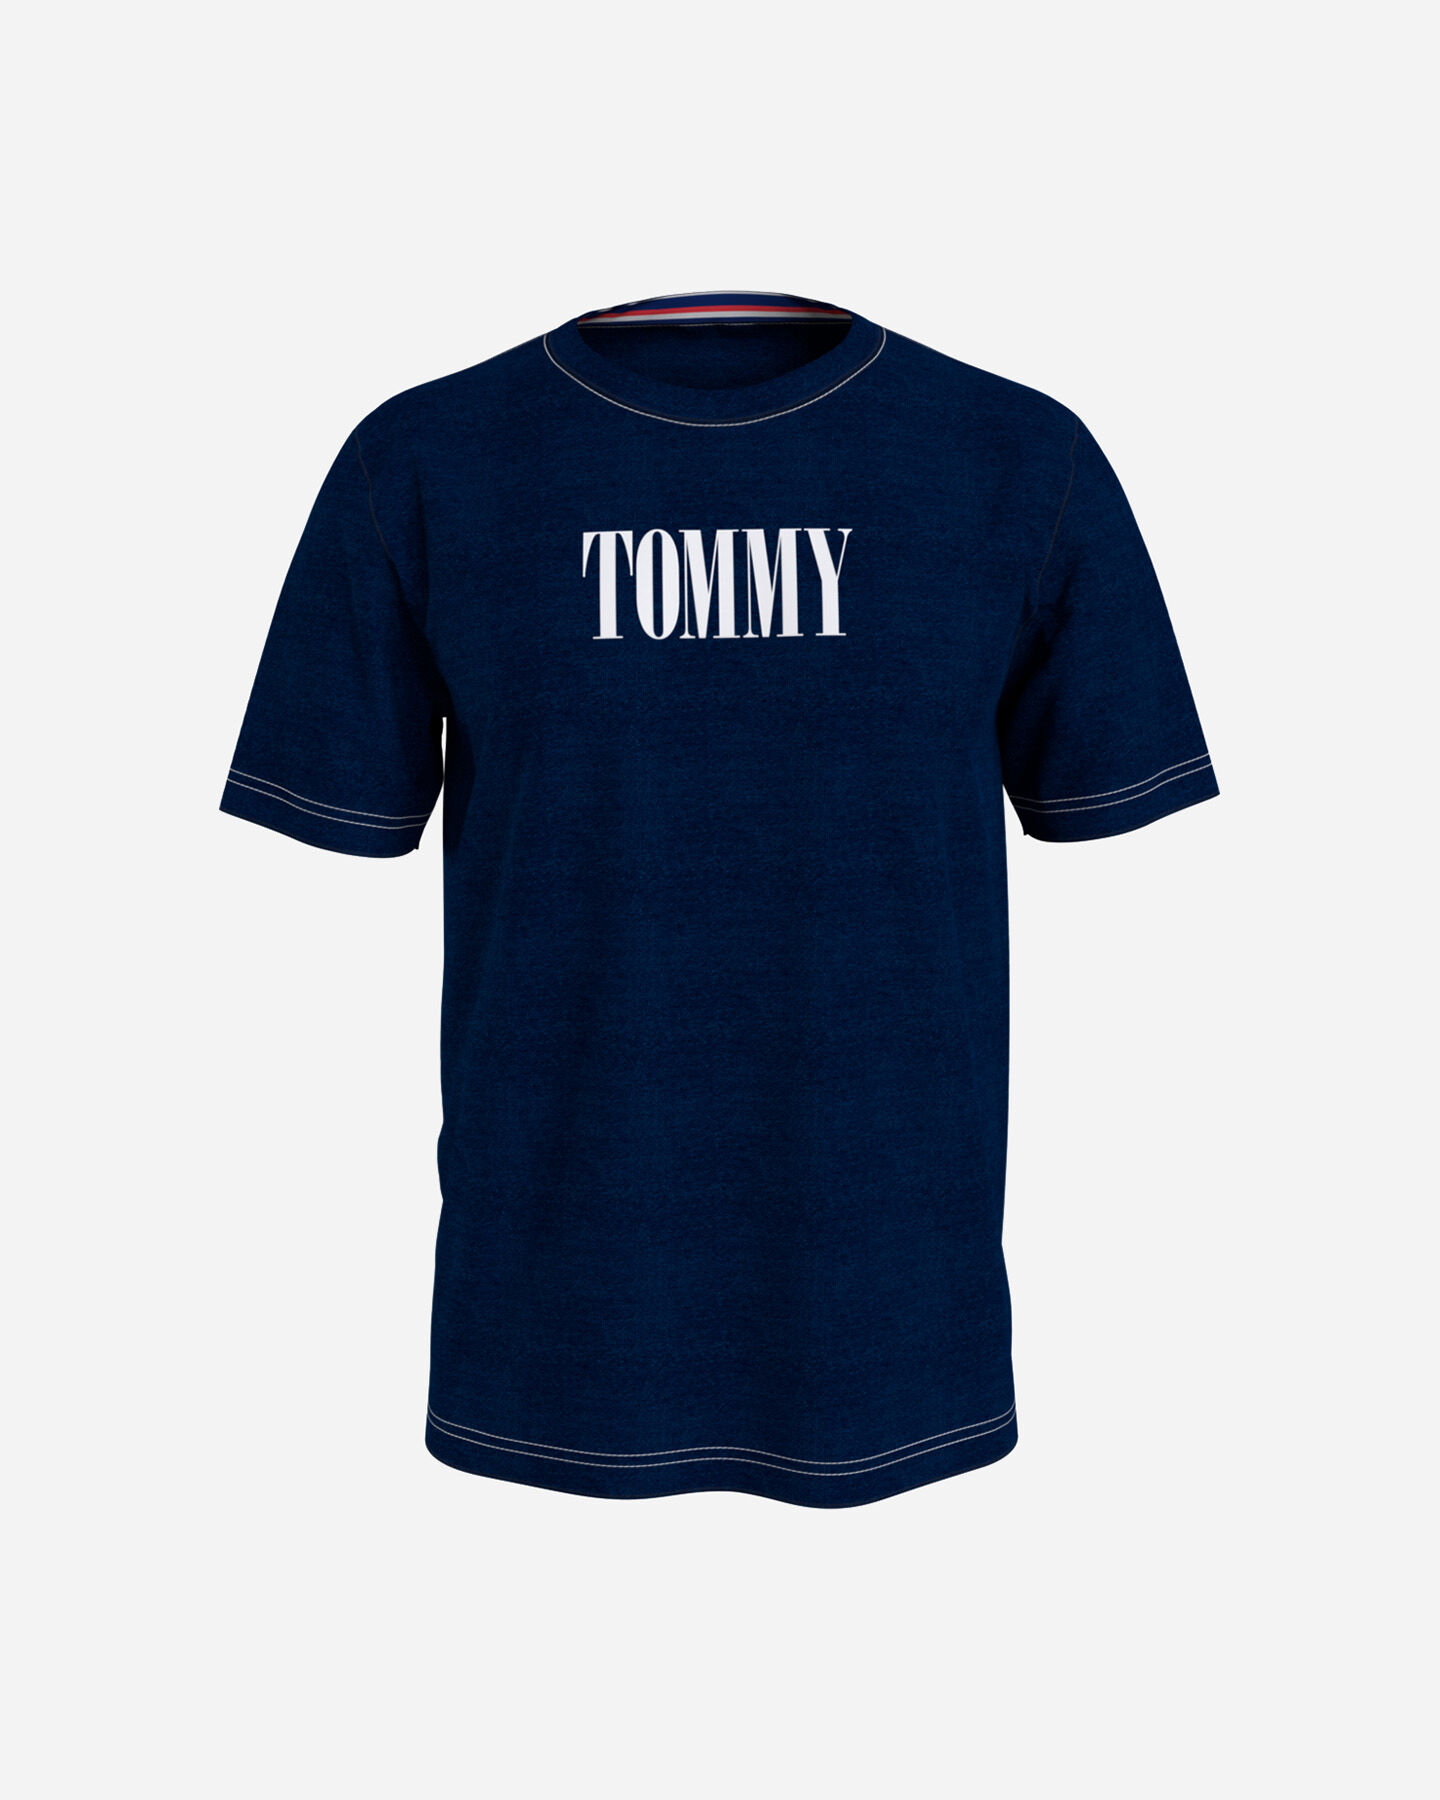  T-Shirt TOMMY HILFIGER LOGO M S4105804|DW5|M scatto 0